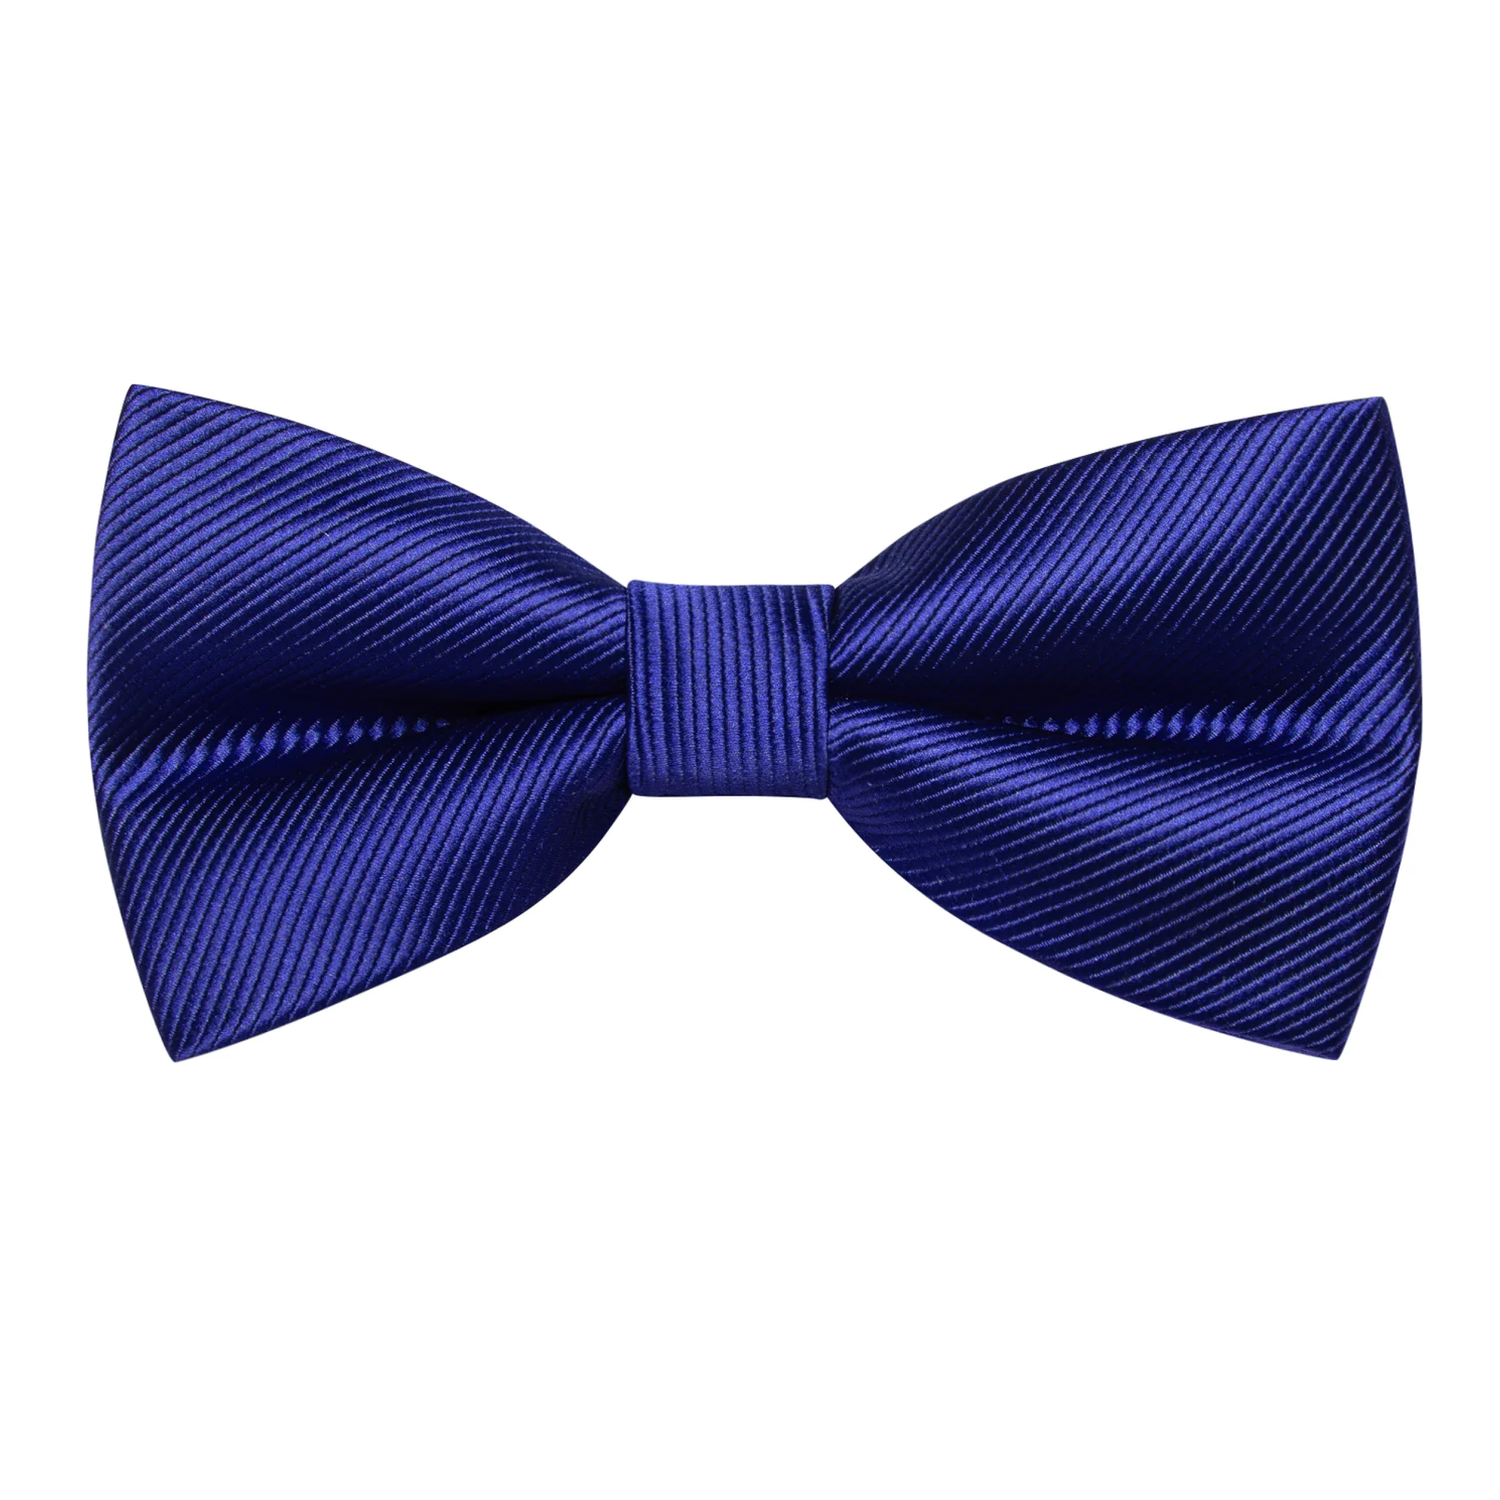 A Dark Blue Solid Pattern Silk Self Tie Bow Tie